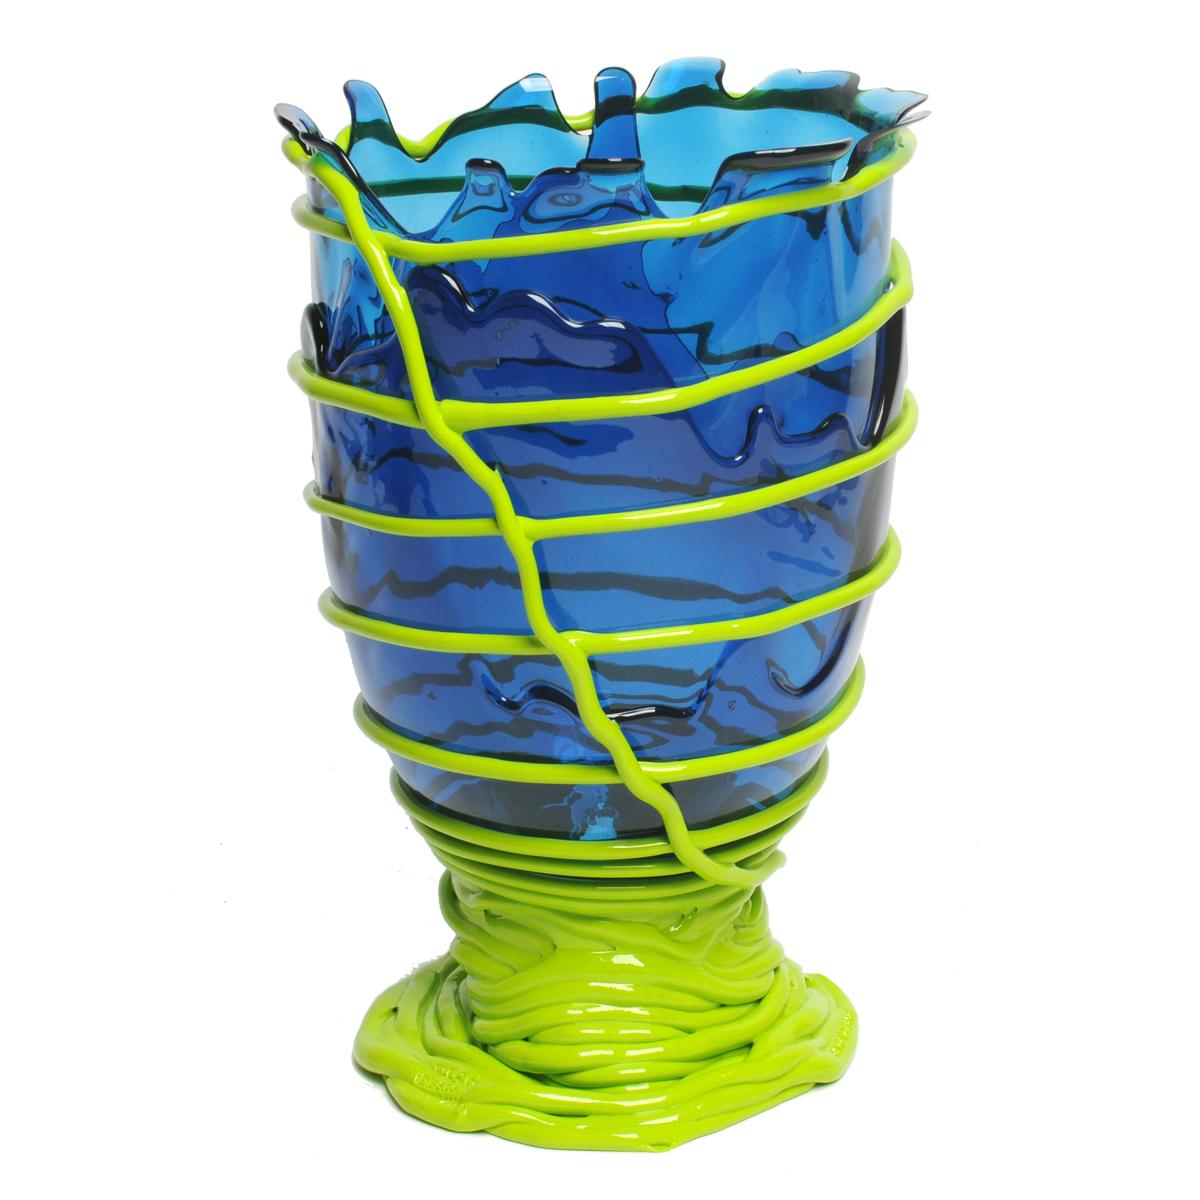 Pompitu II vase, blue, acid green.

Vase in soft resin designed by Gaetano Pesce in 1995 for Fish Design collection.

Measures: L ø 22cm x H 36cm

Other sizes available

Colours: Blue, acid green.
Vase in soft resin designed by Gaetano